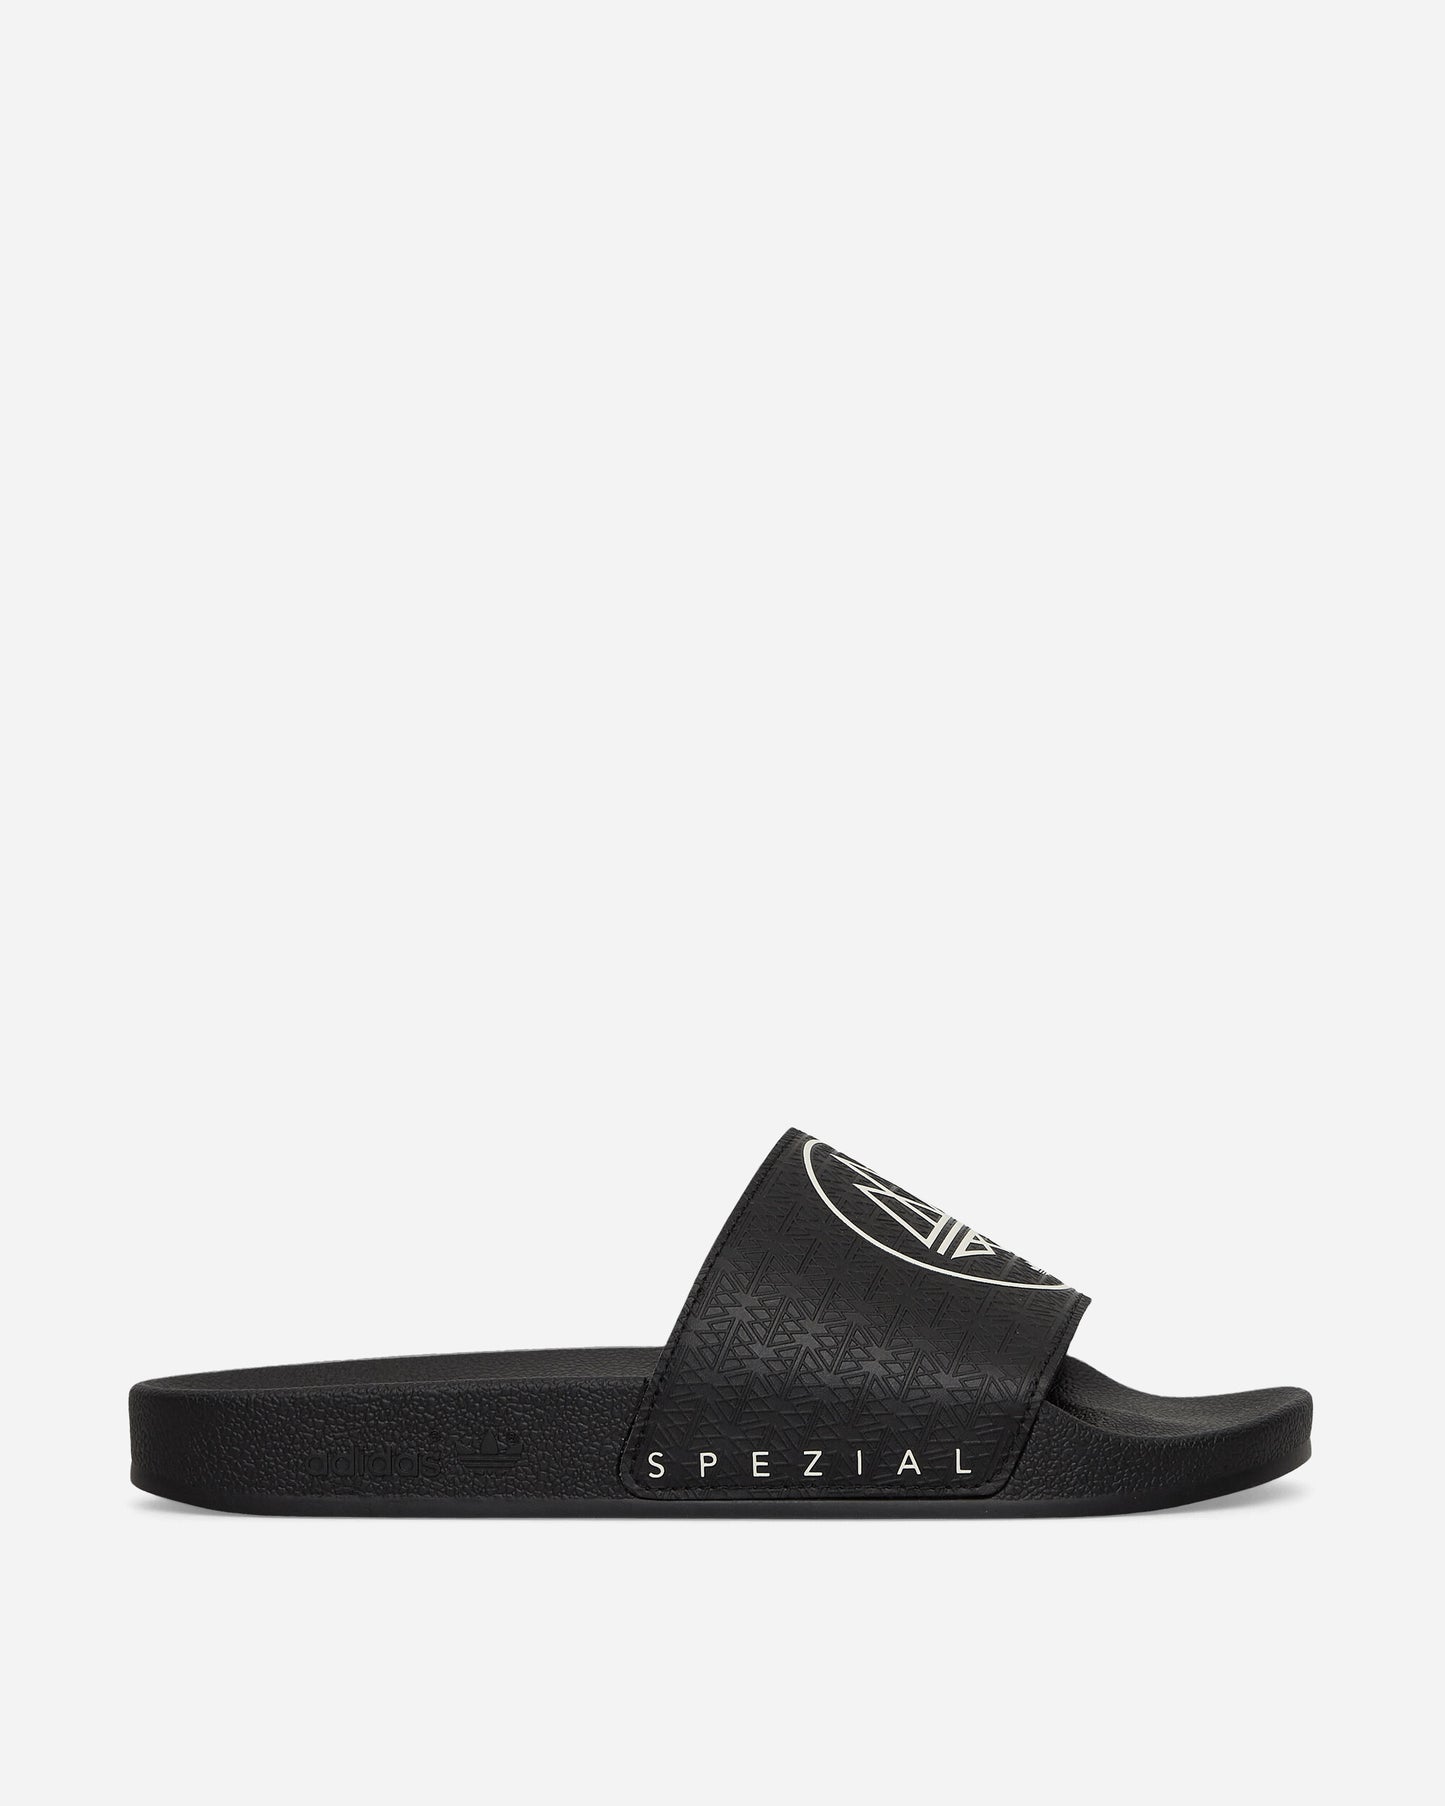 adidas Adilette Spzl Core Black/Chalk White Sandals and Slides Slides IG8941 001